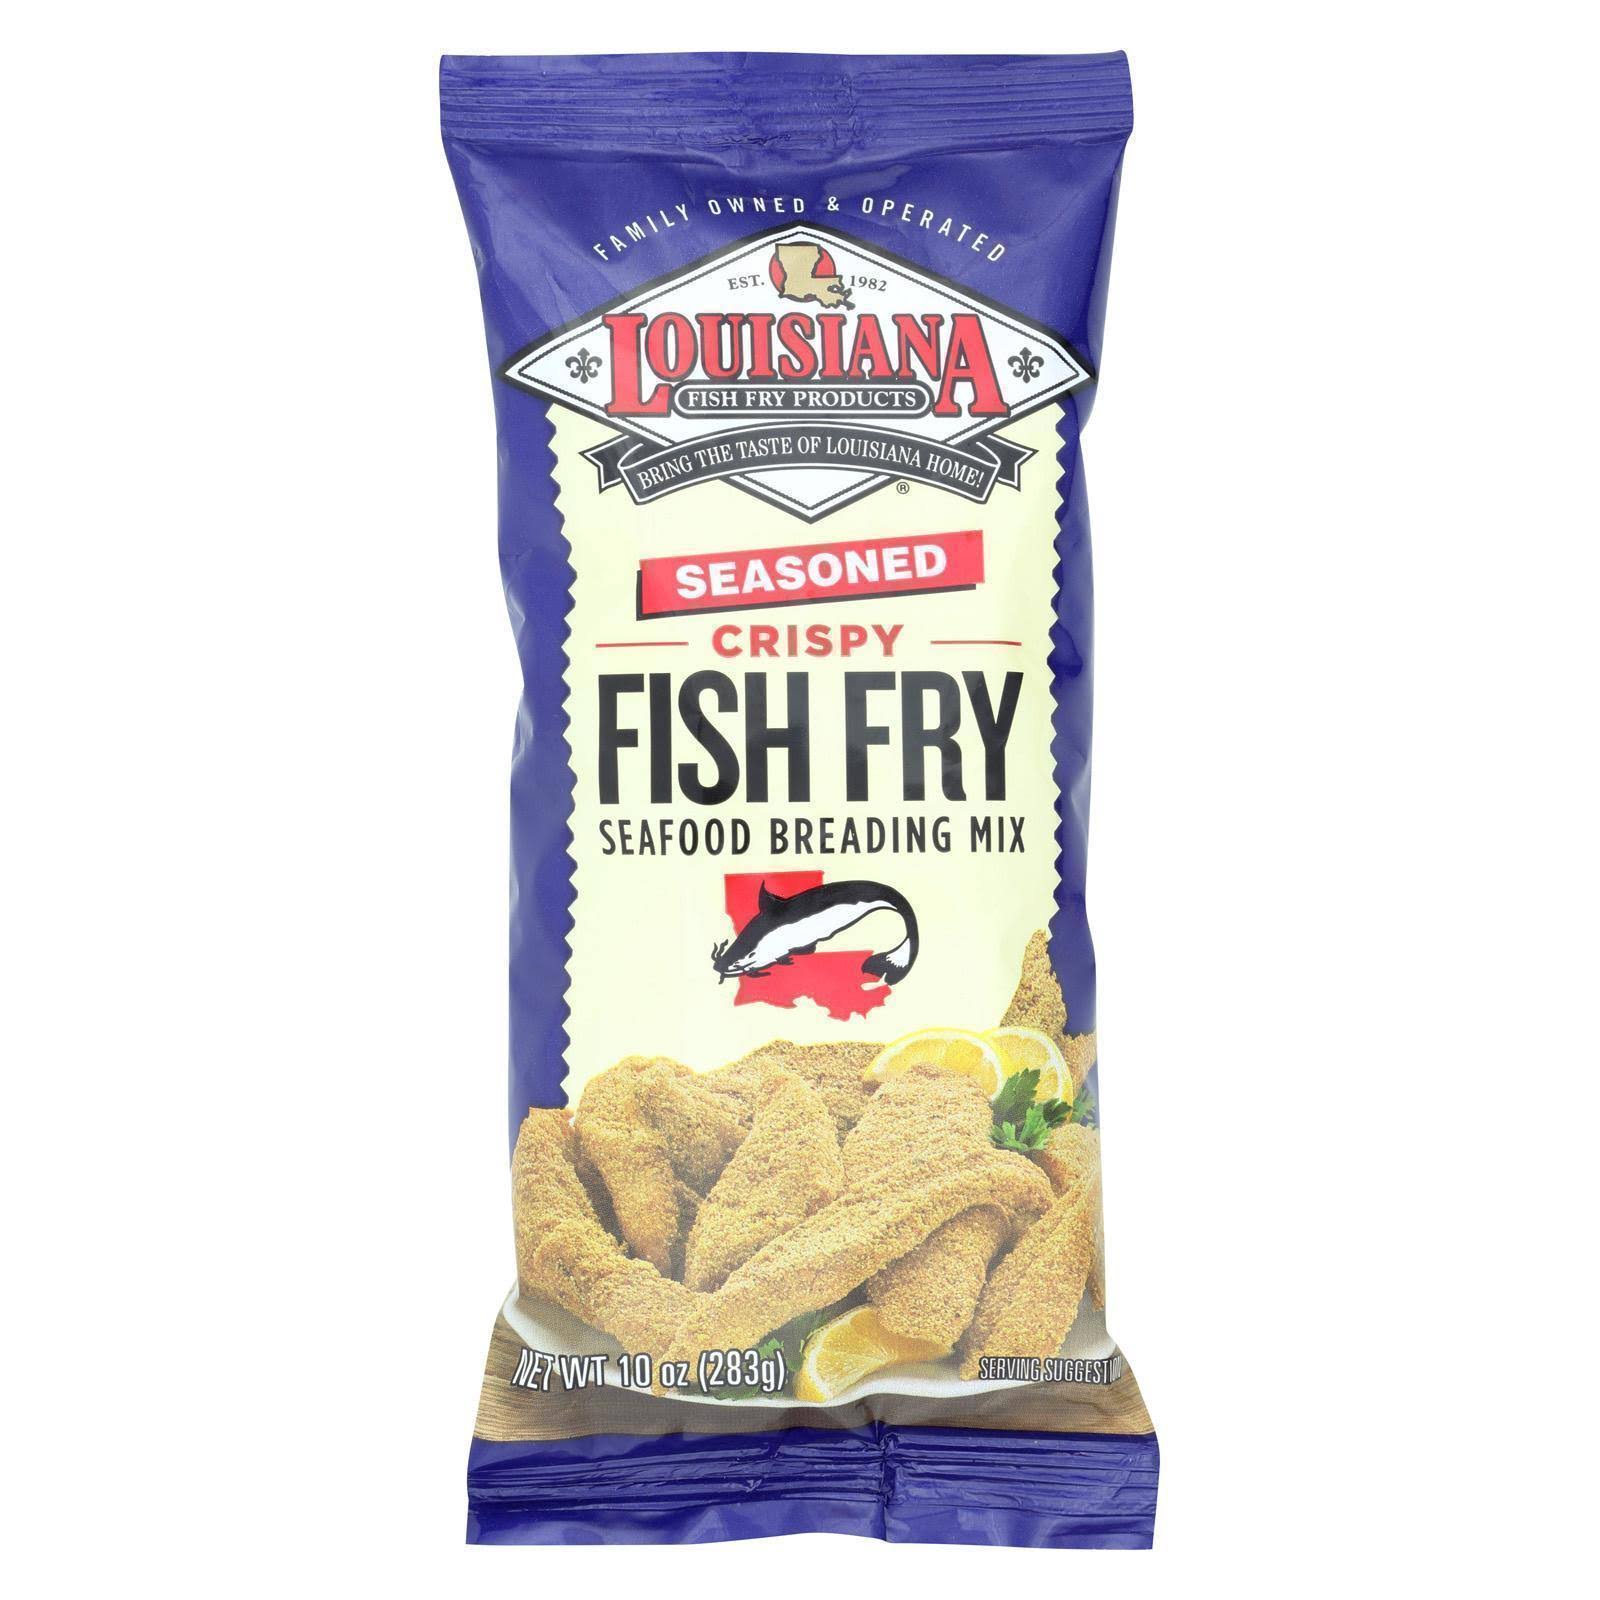 Louisiana Seasoned Crispy Fish Fry Seafood Breading Mix - 10oz